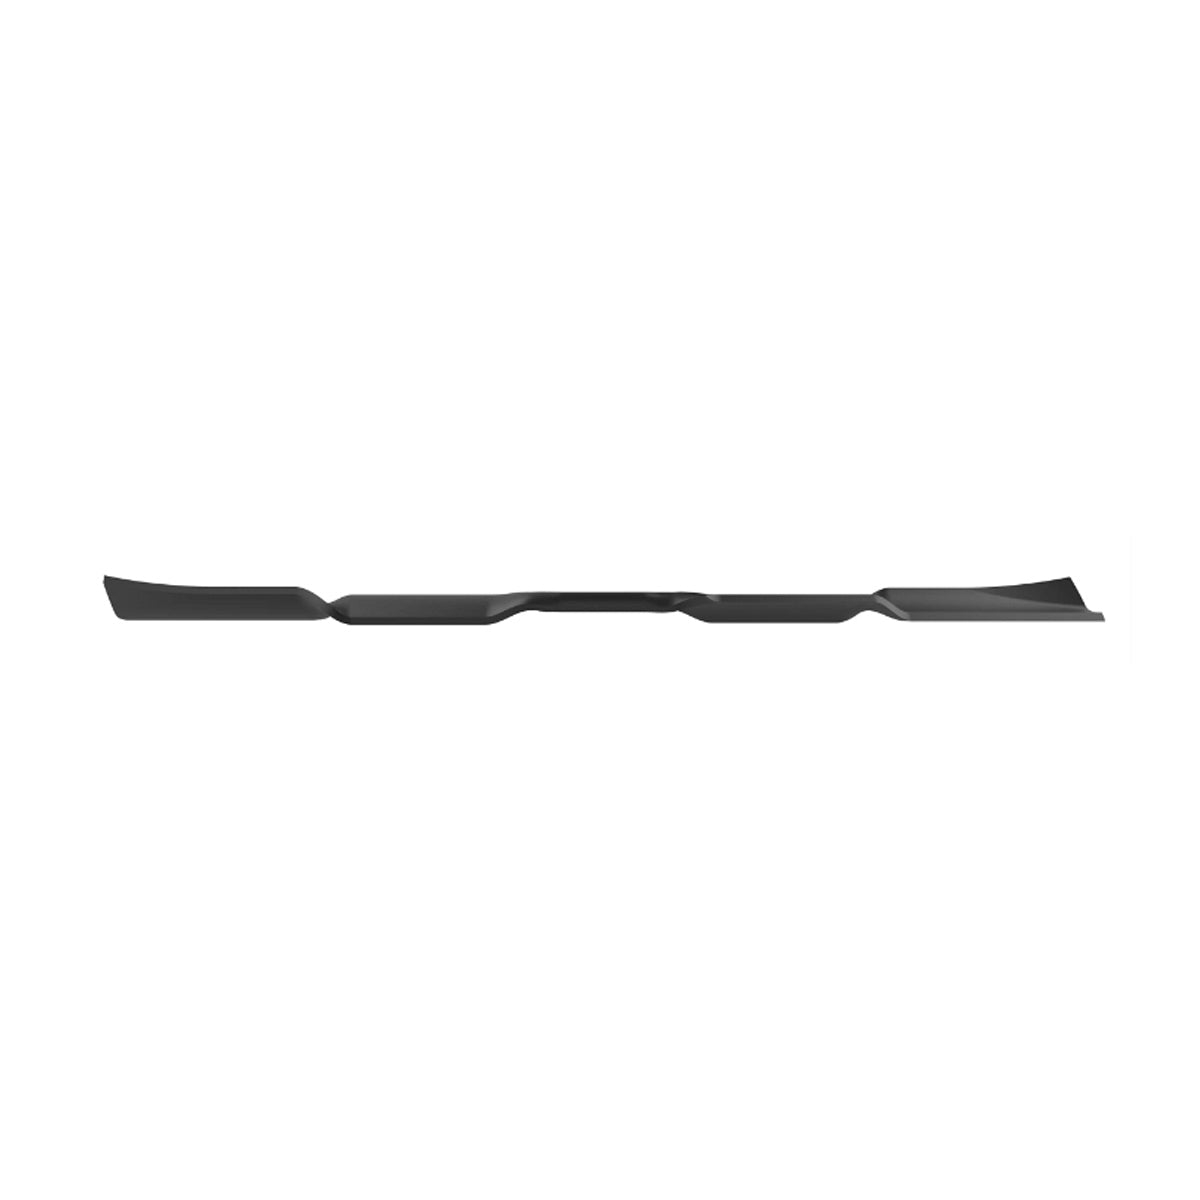 John Deere Single Mower Blade (Mulch) for 42" Deck - M170642